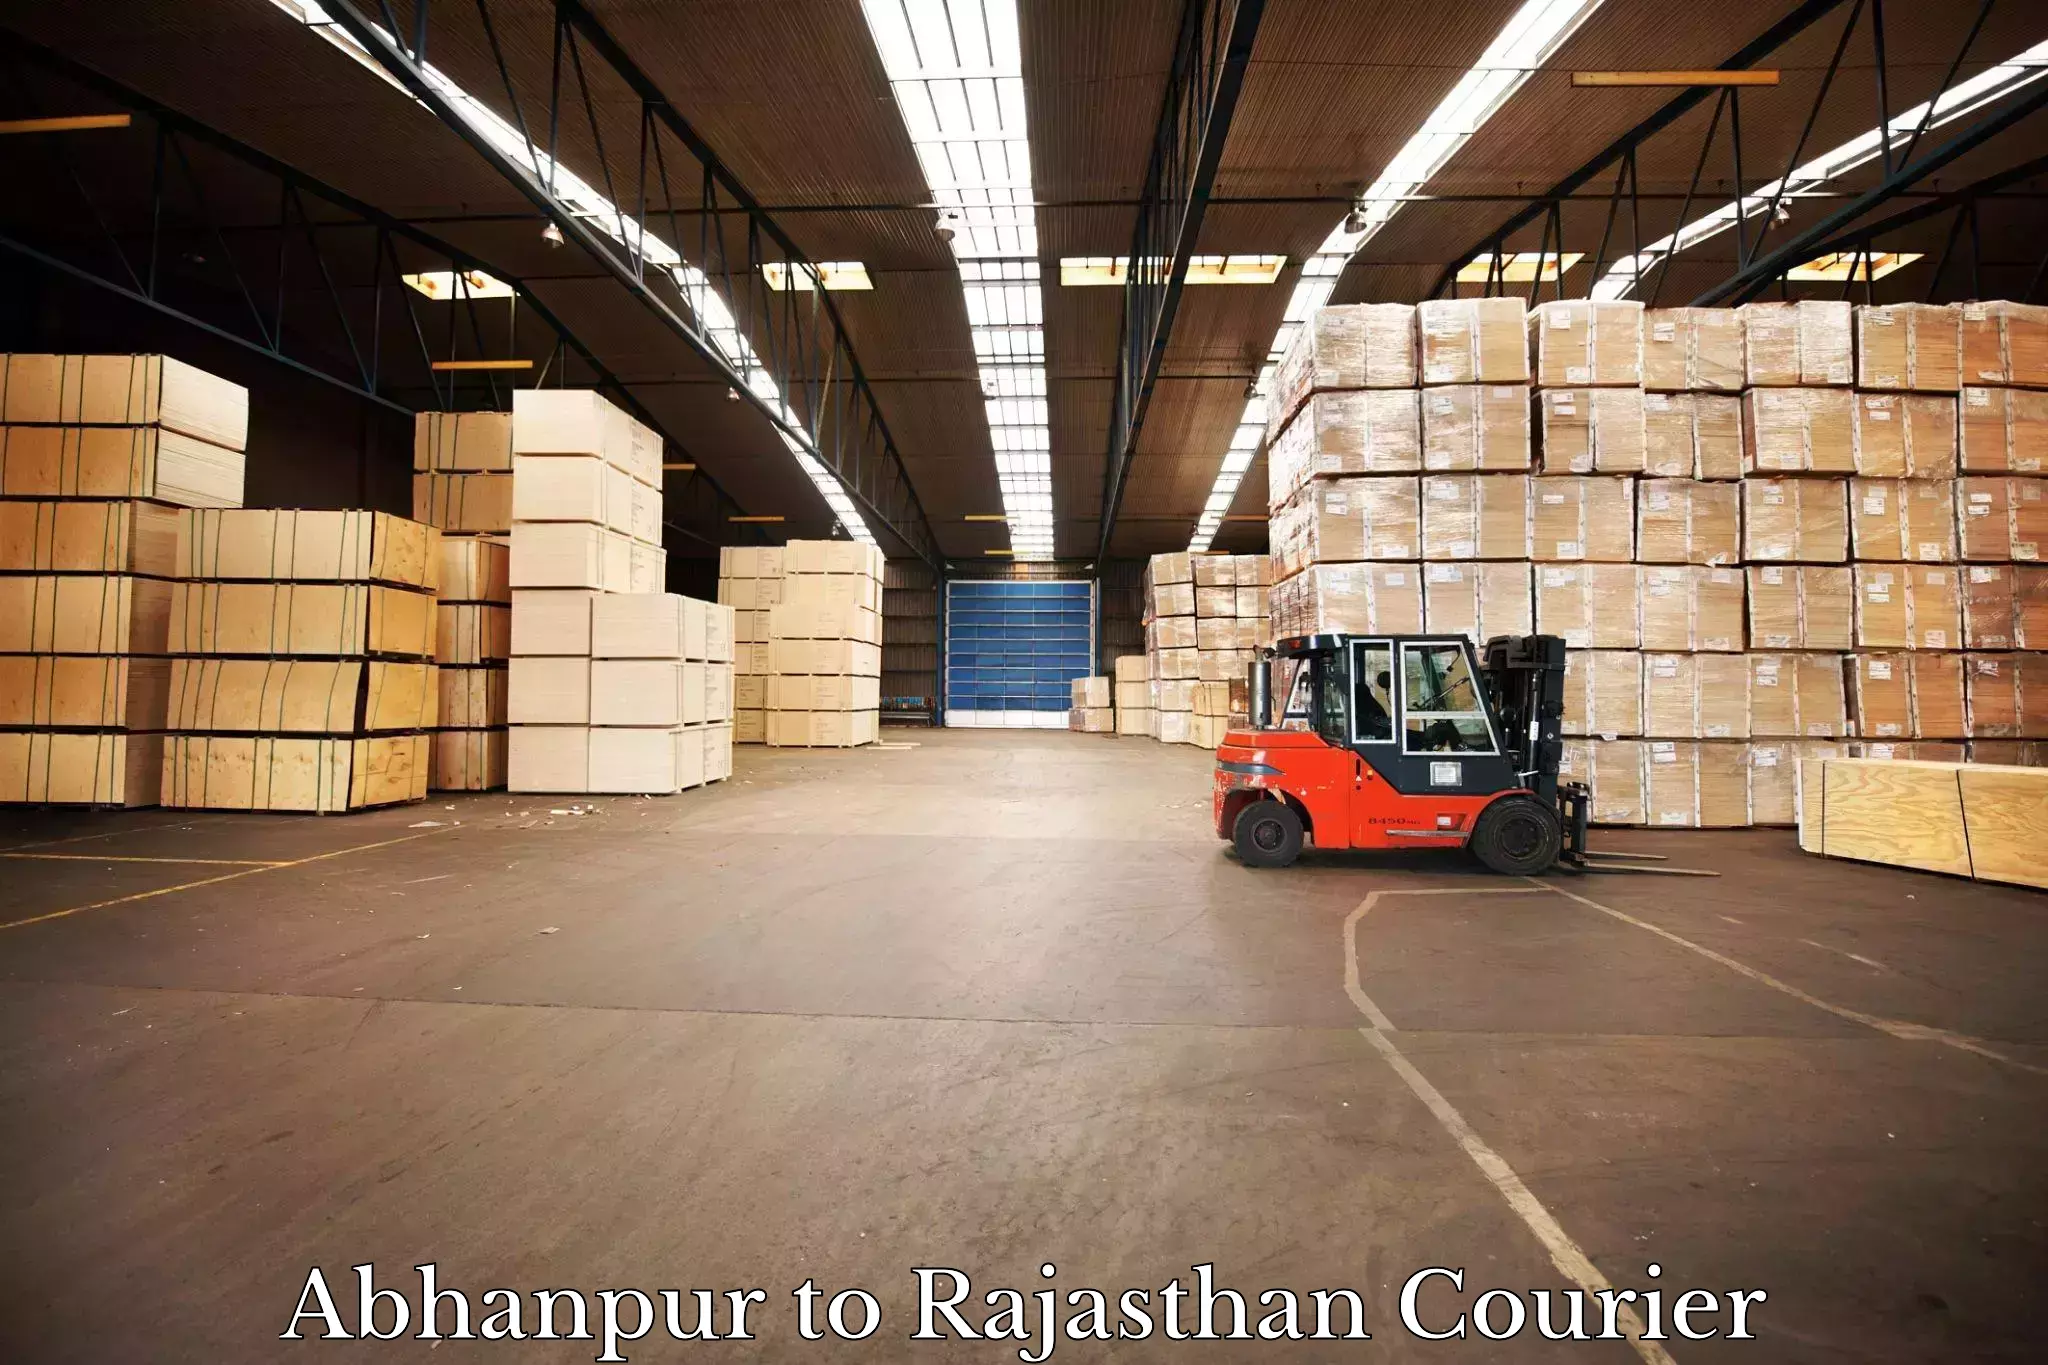 Courier service comparison Abhanpur to Sumerpur